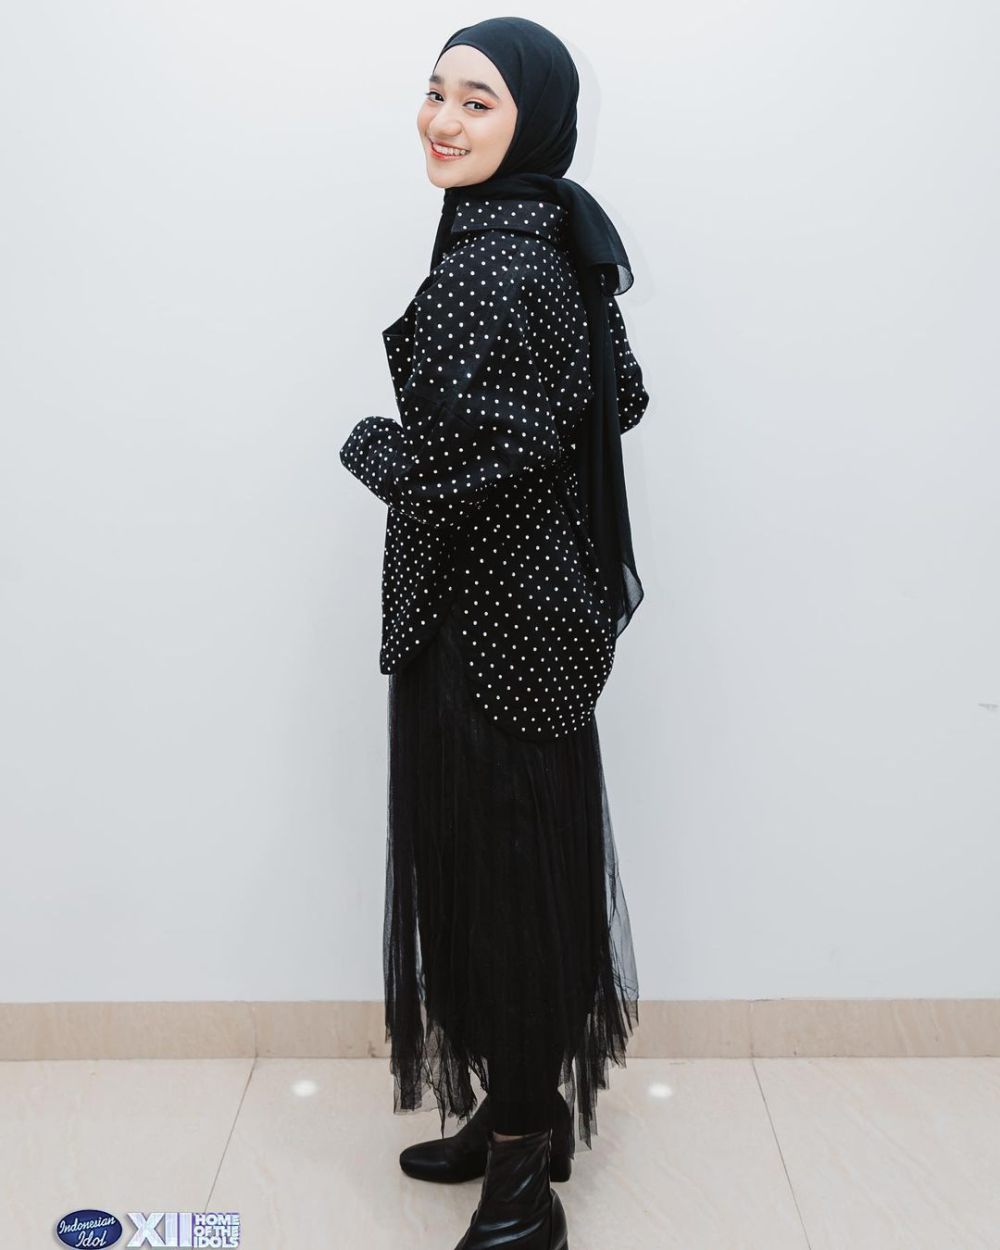 7 Ide Styling Black Outfit ala Nabila Taqiyyah, Super Cool!